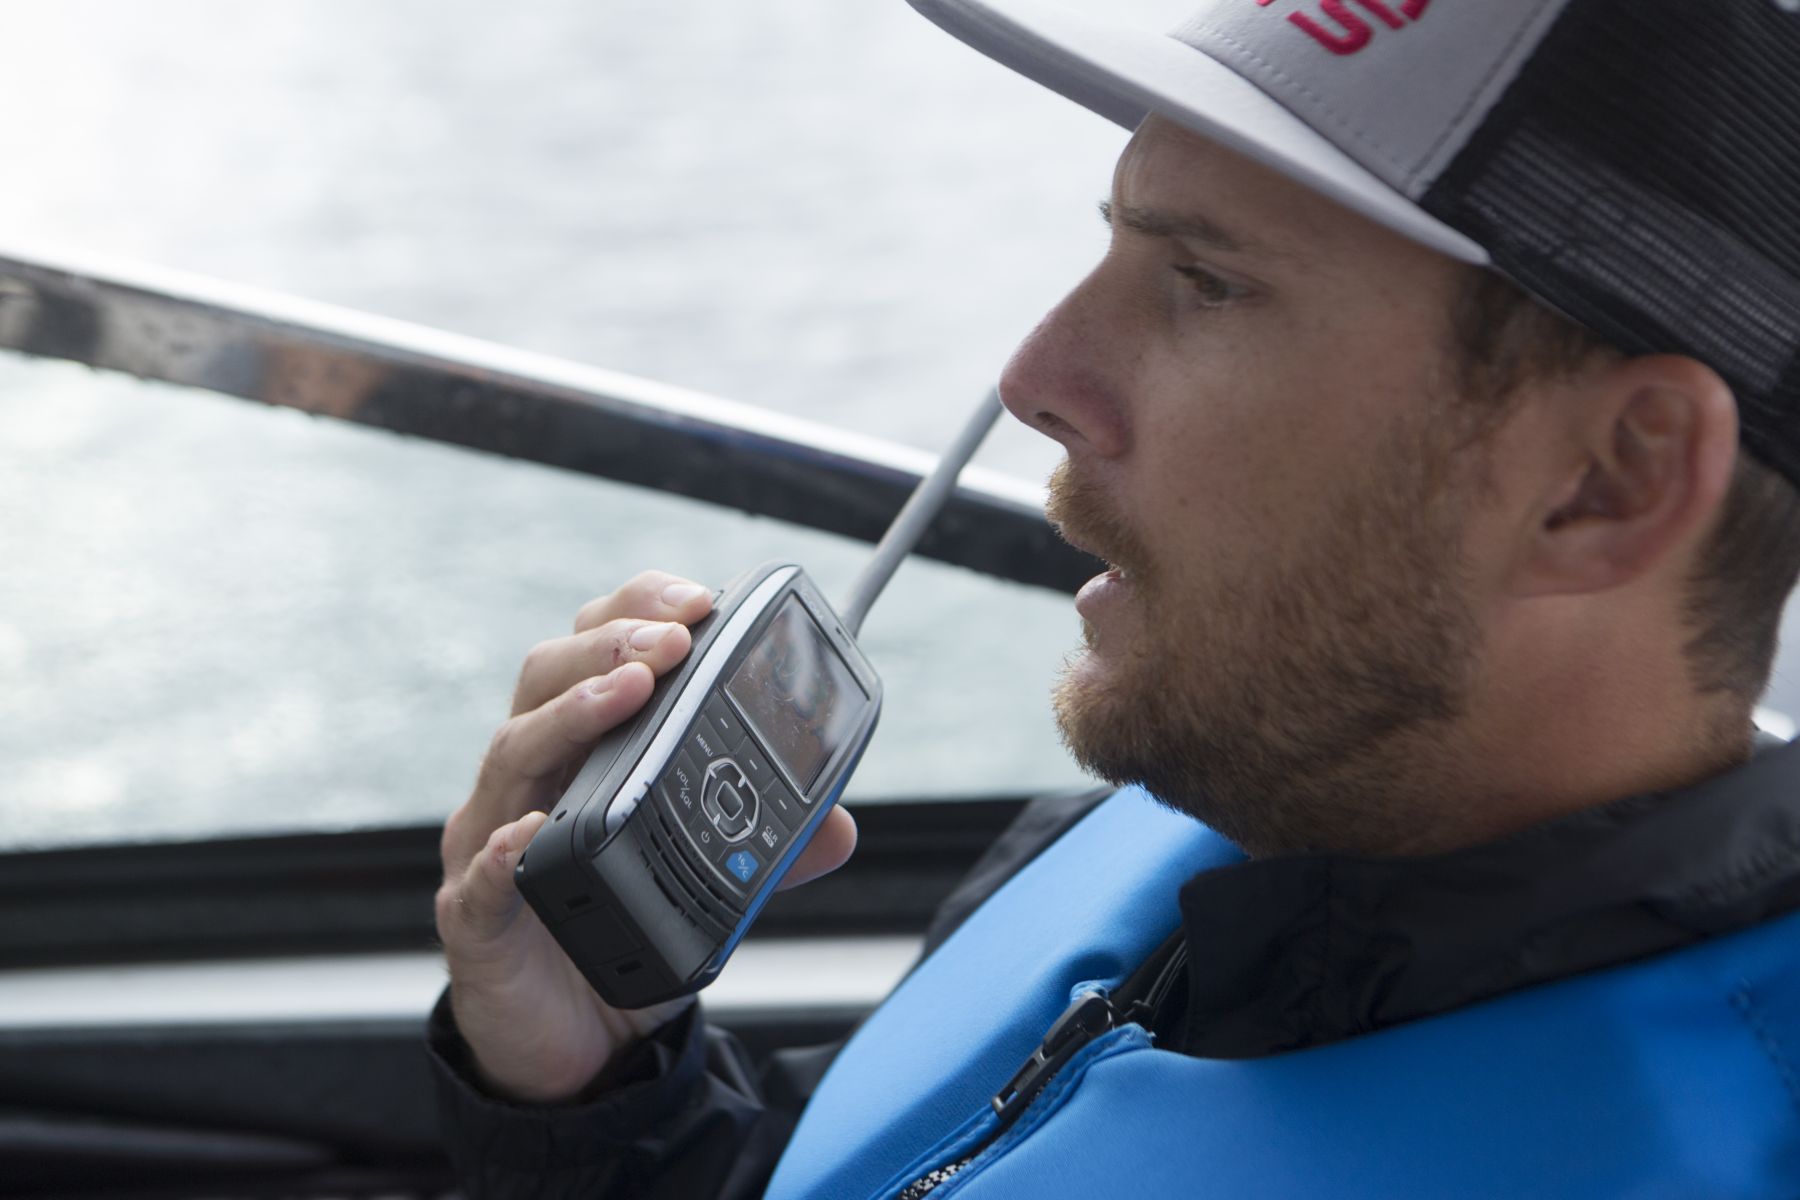 Using a handheld VHF-DSC marine band radio set to channel 16.